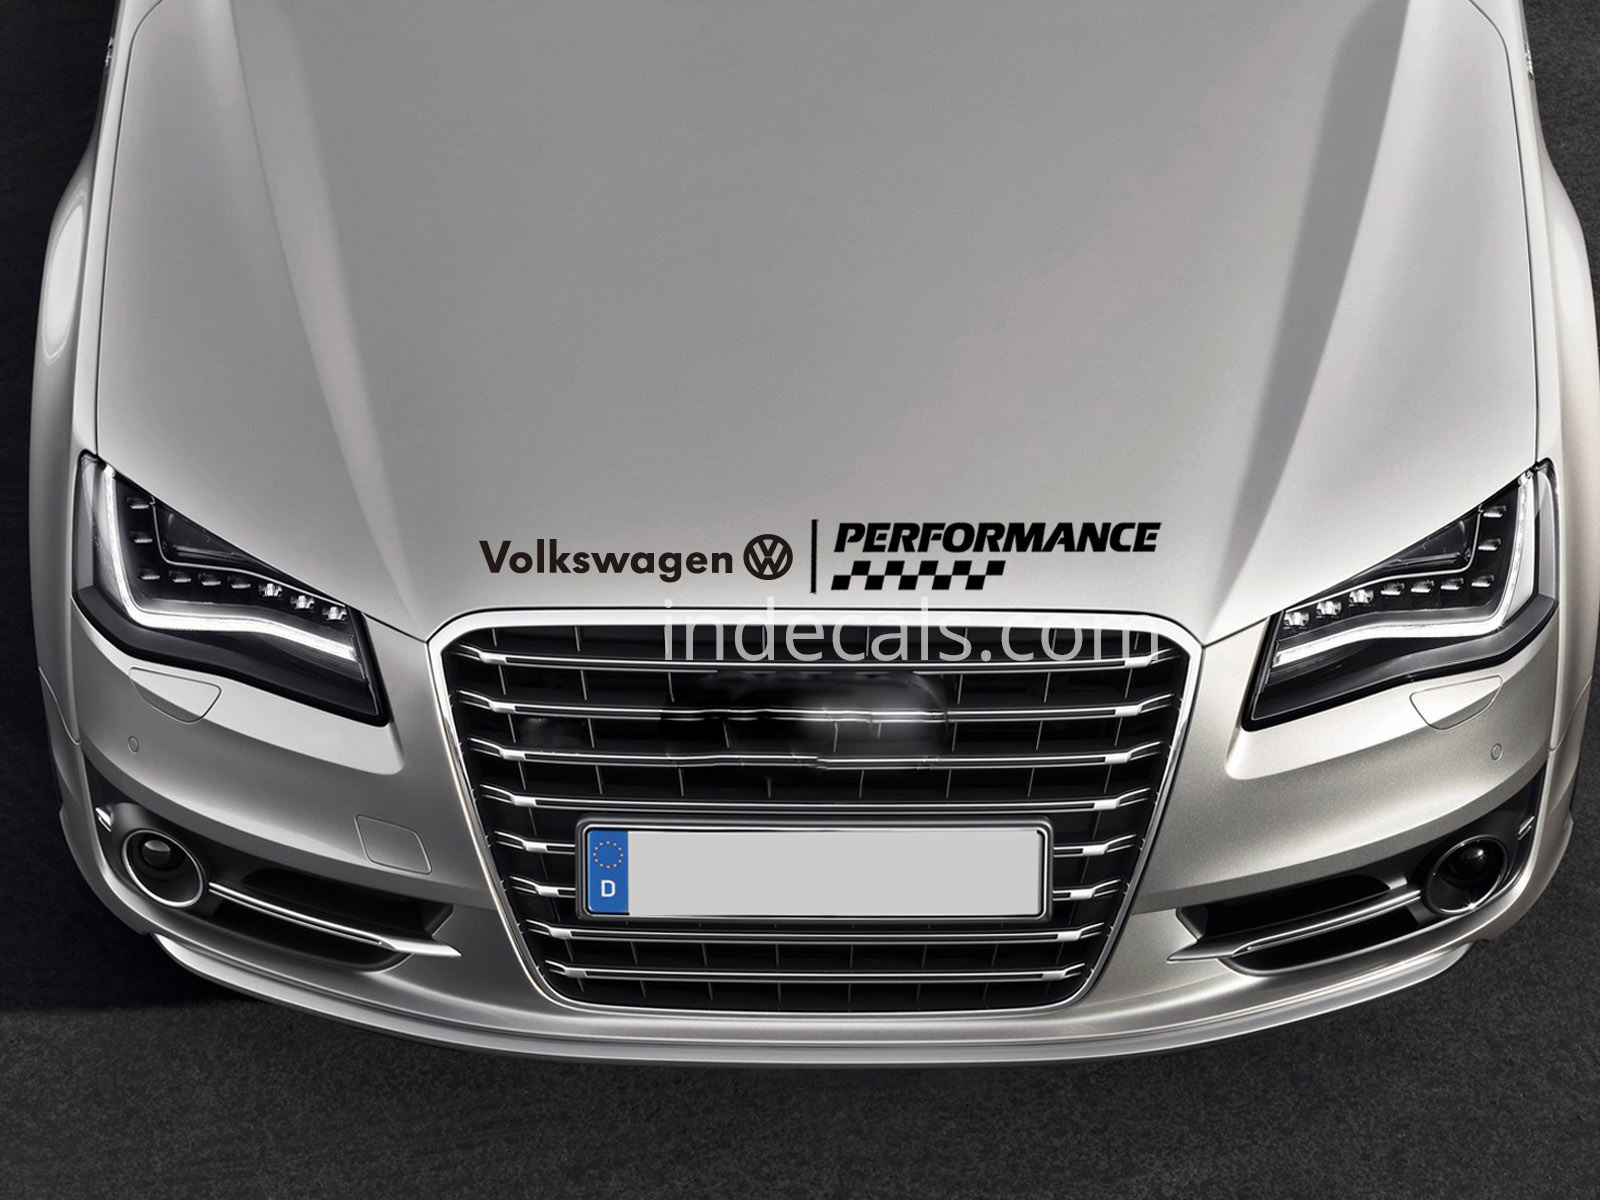 1 x Volkswagen Performance Sticker for Bonnet - Black